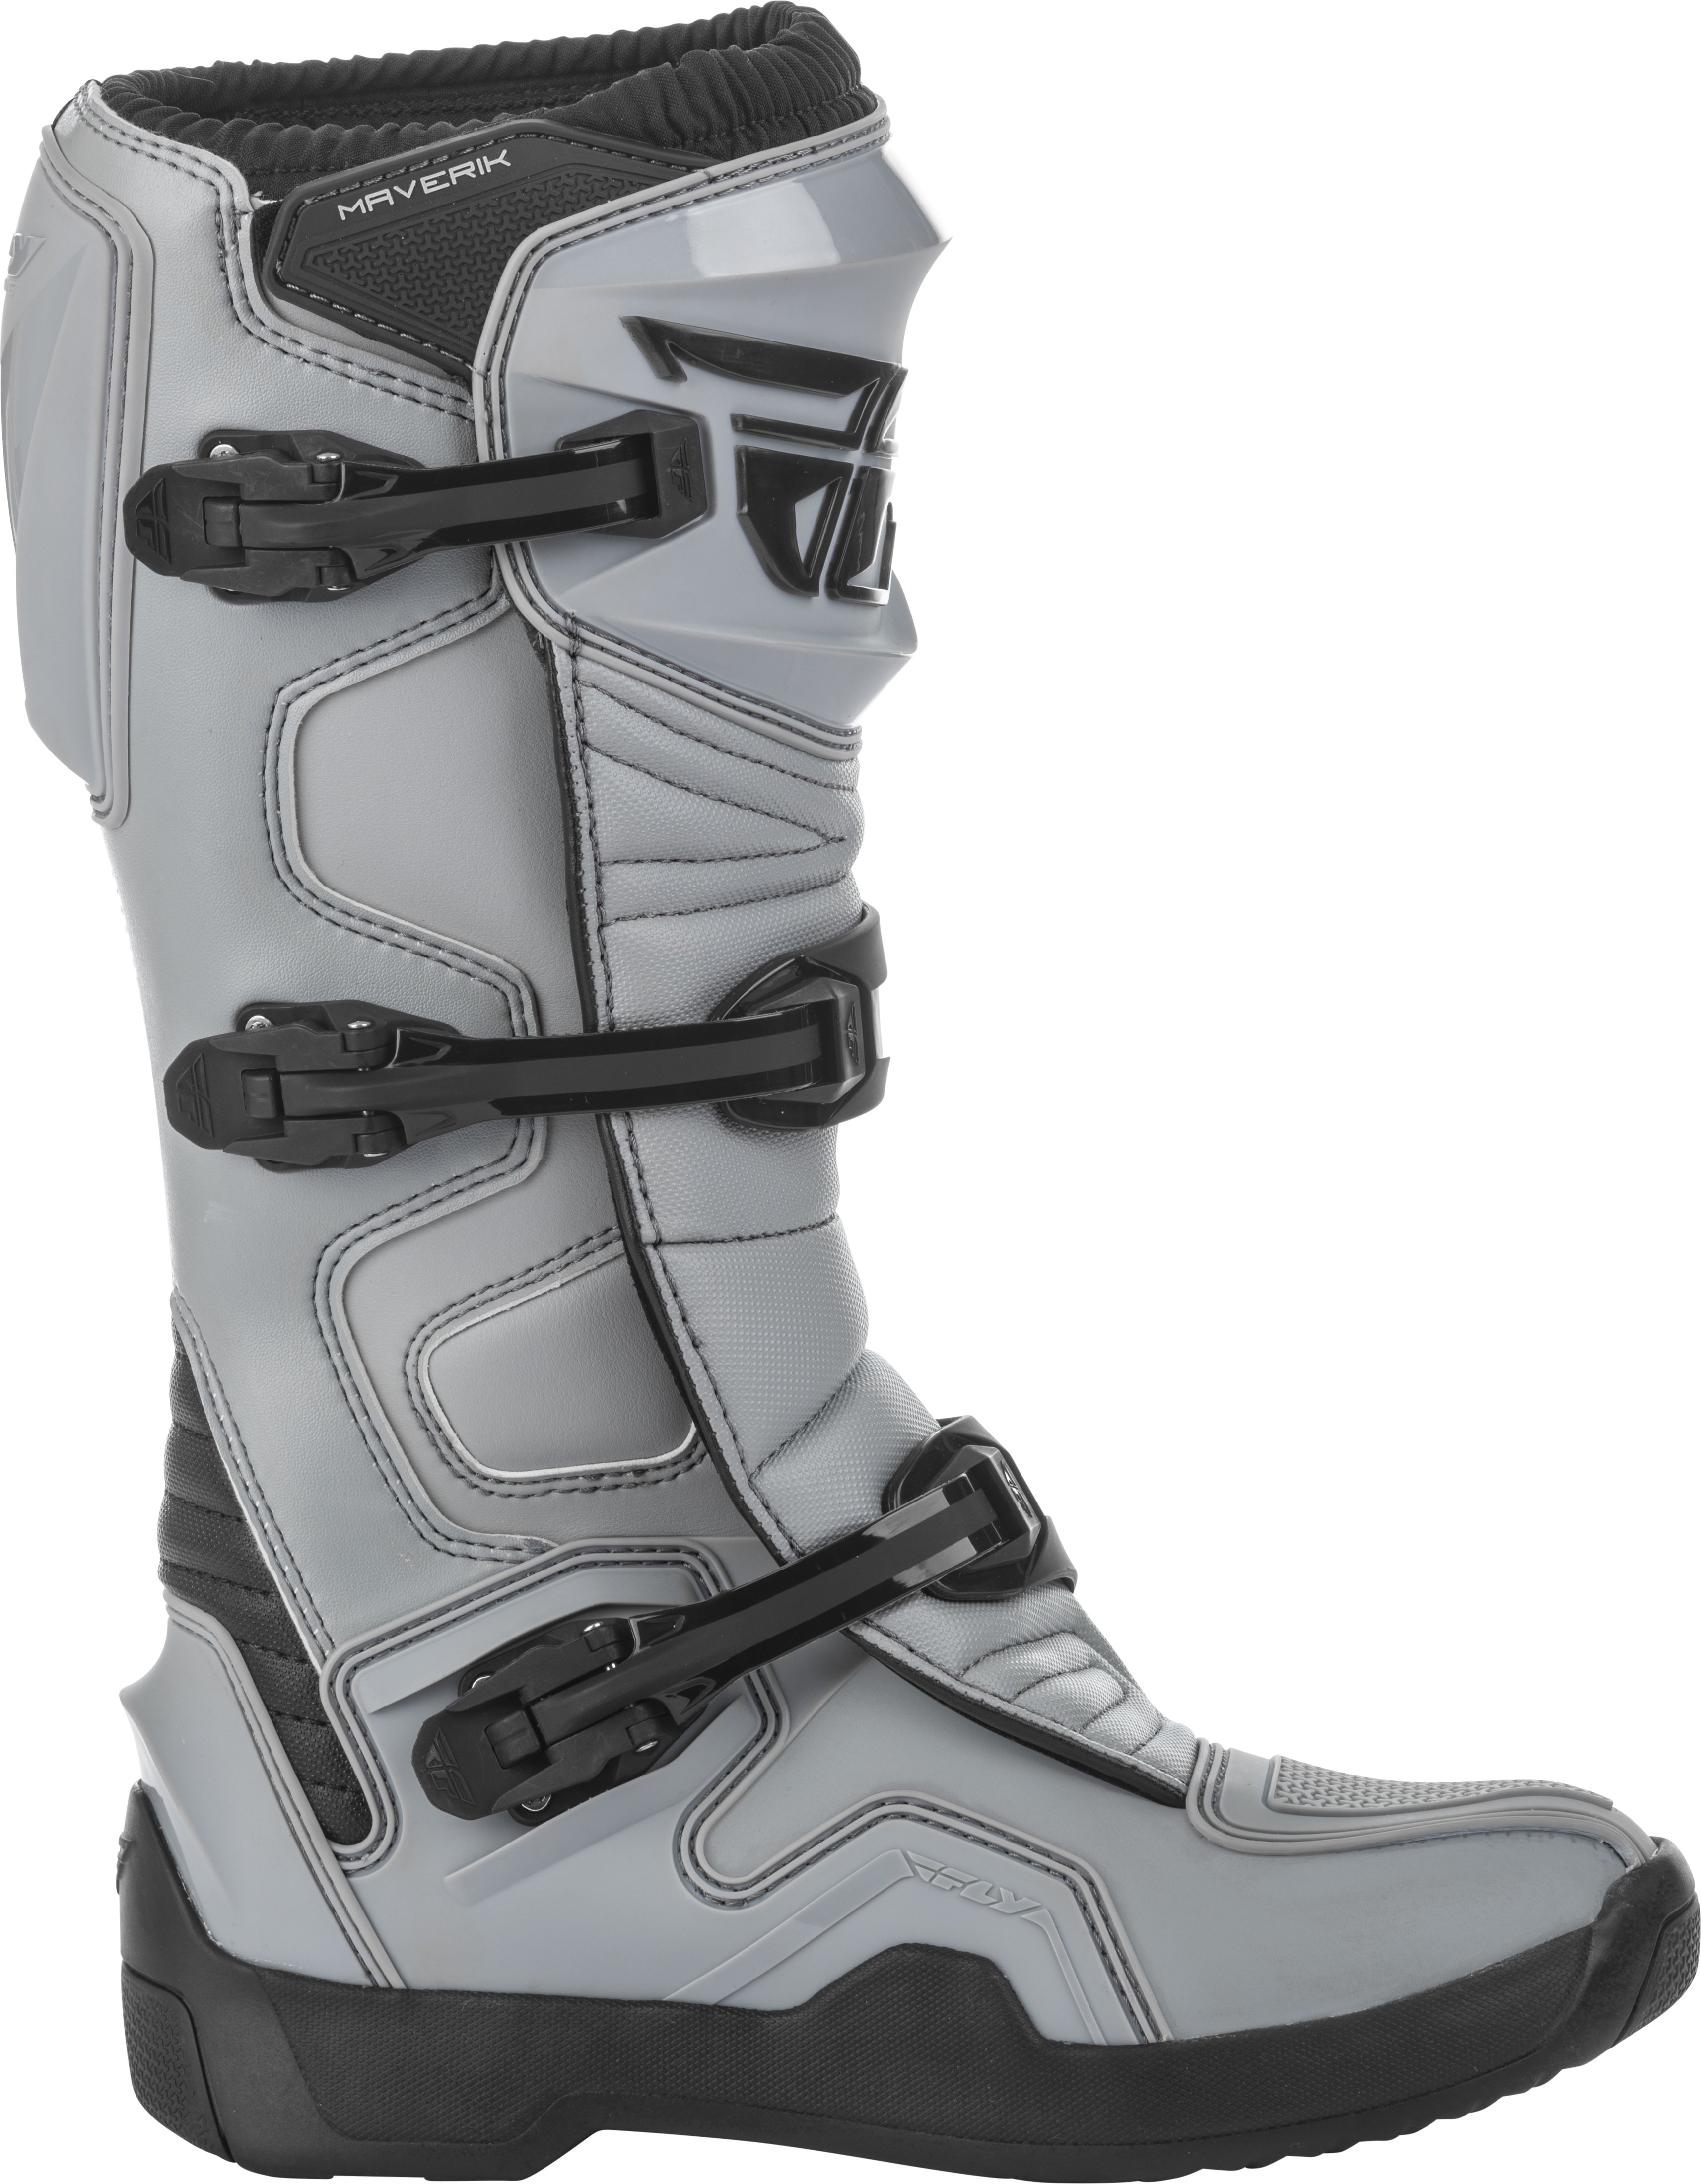 Maverik Boots Grey/Black Size 14 - Click Image to Close